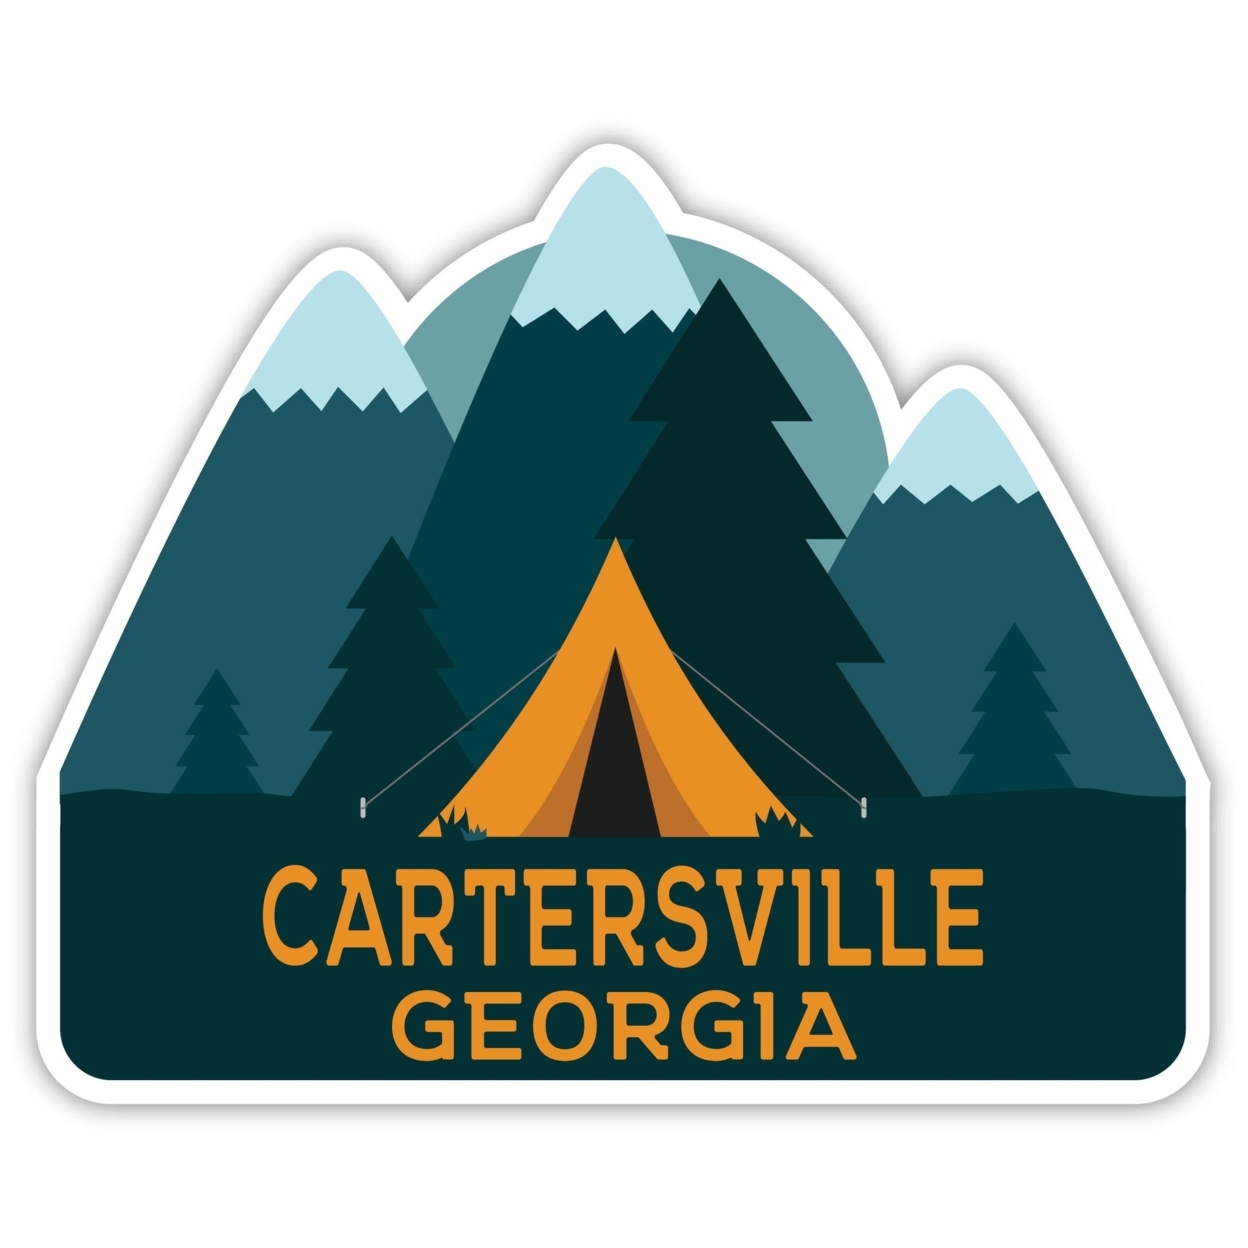 Cartersville Georgia Souvenir Decorative Stickers (Choose Theme And Size) - 4-Pack, 4-Inch, Tent